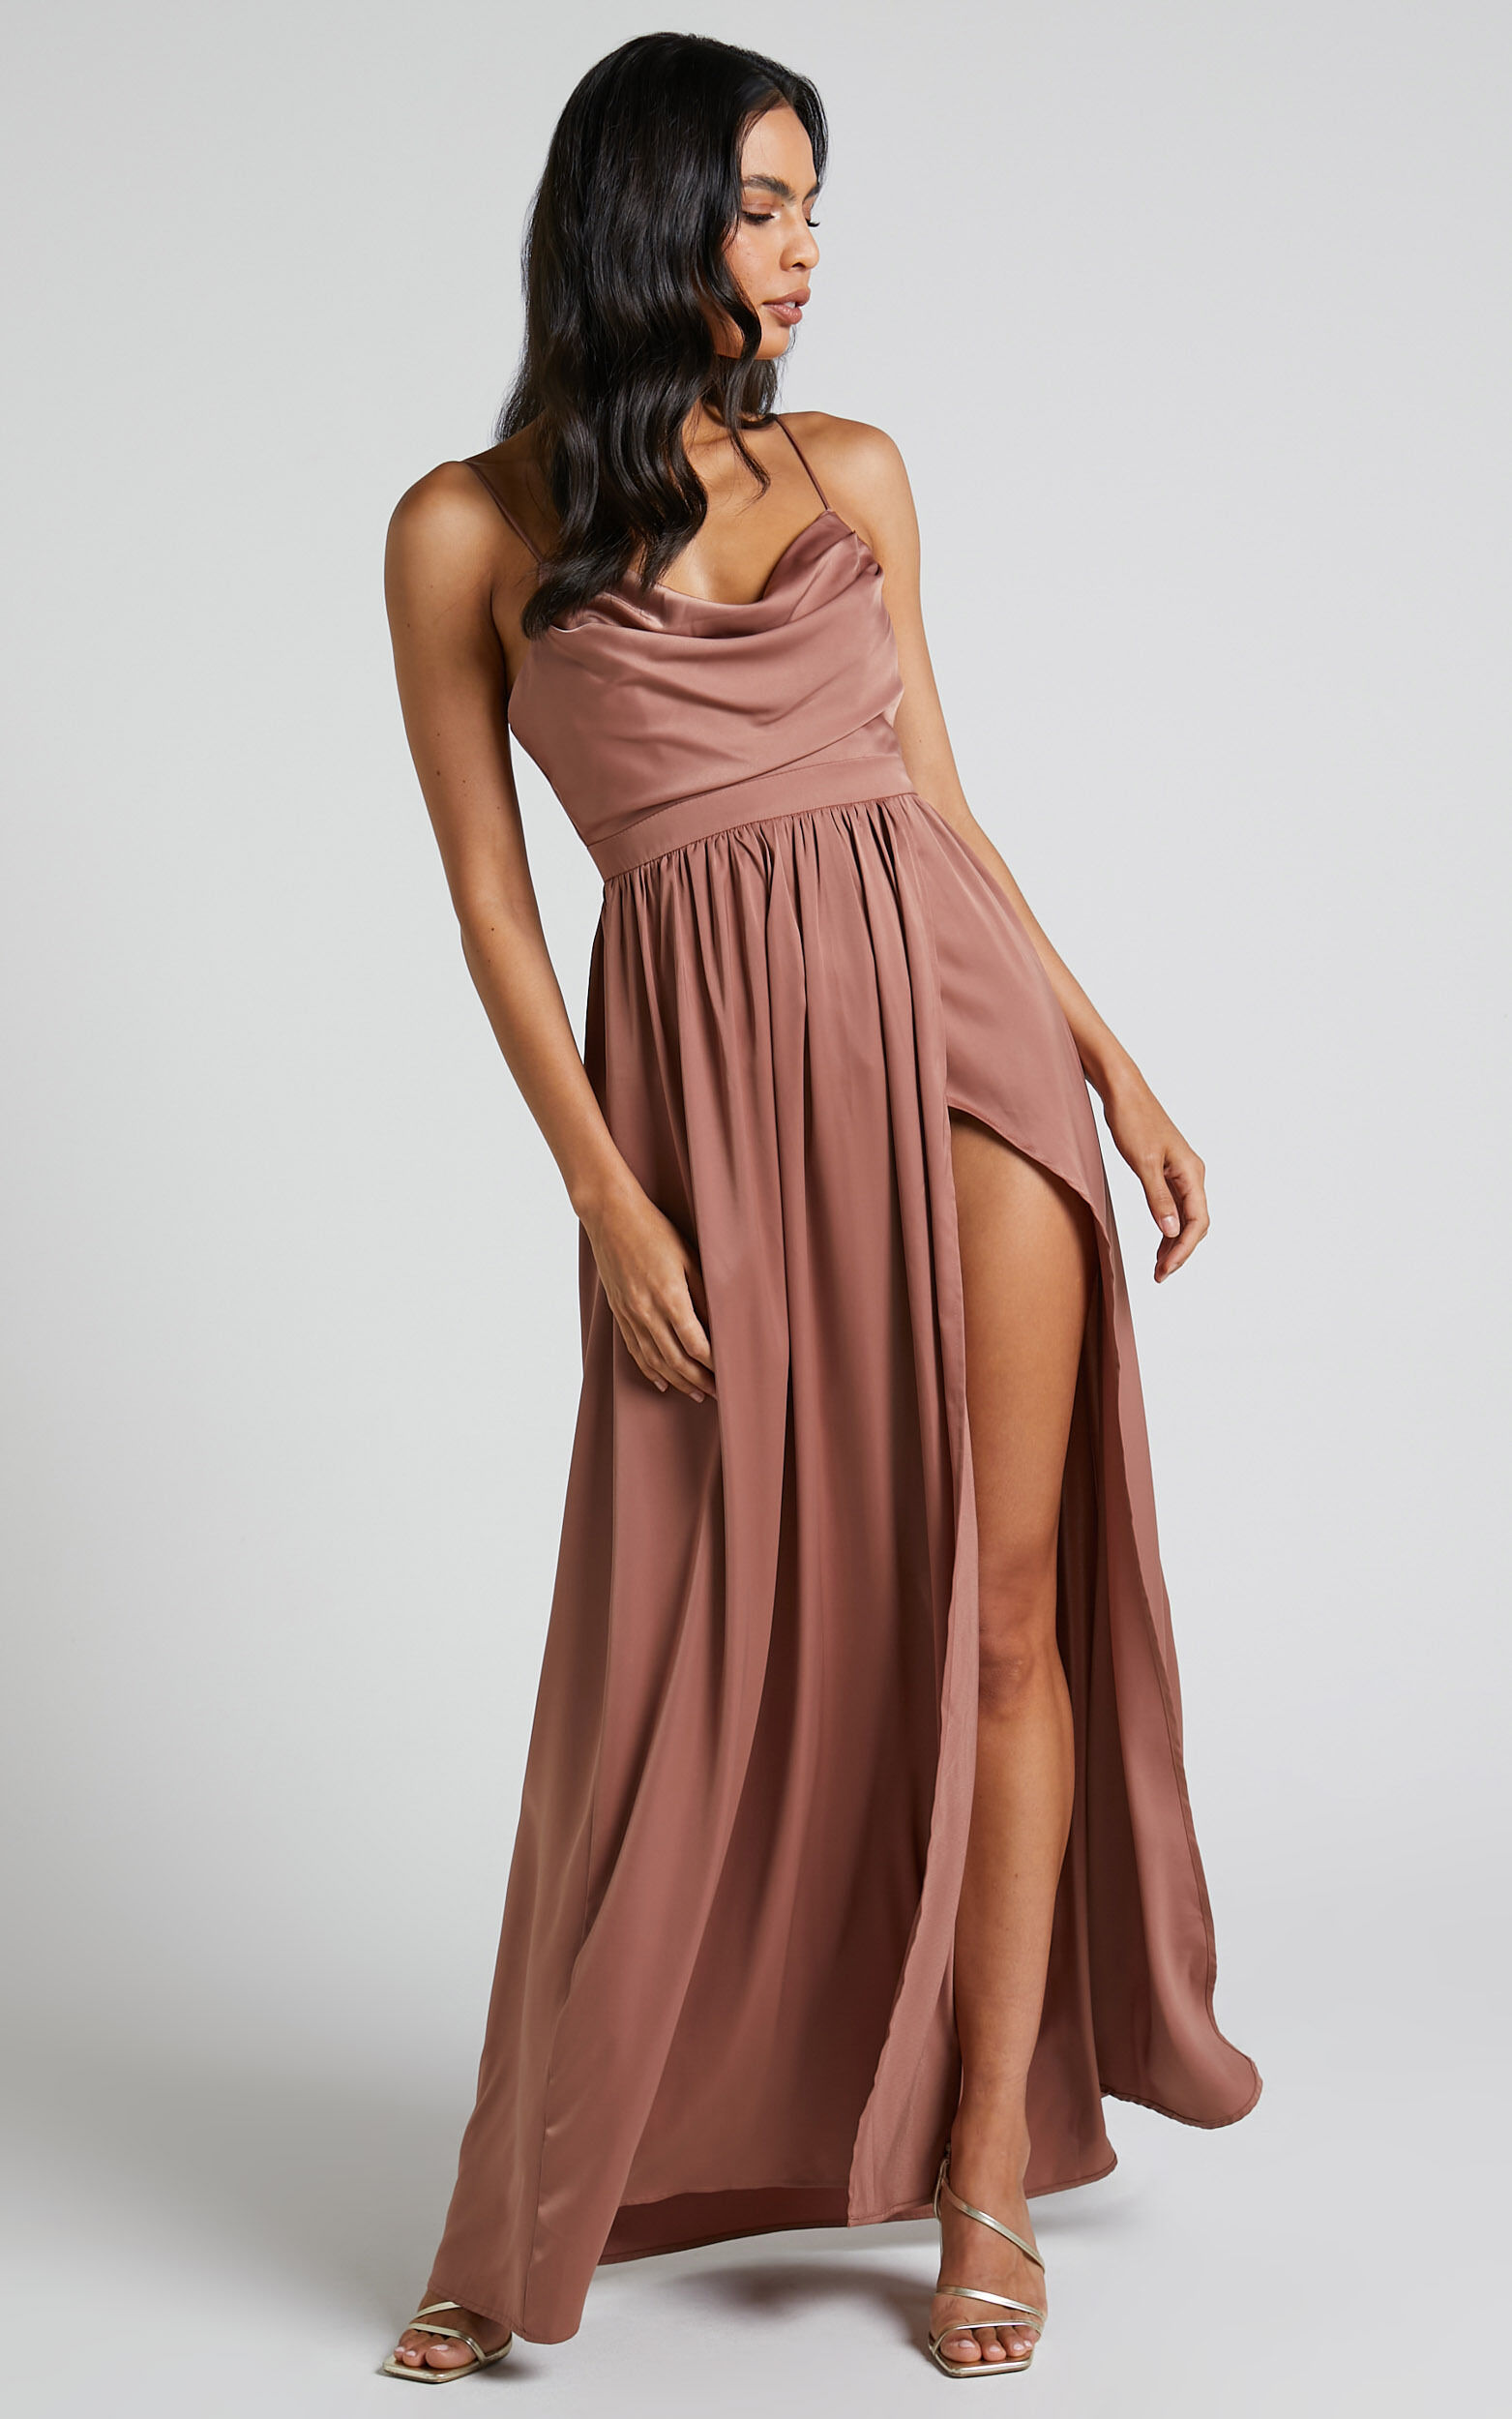 Gemalyn Maxi Dress - Cowl Neck Thigh Split Dress in Dusty Rose - 04, PNK3